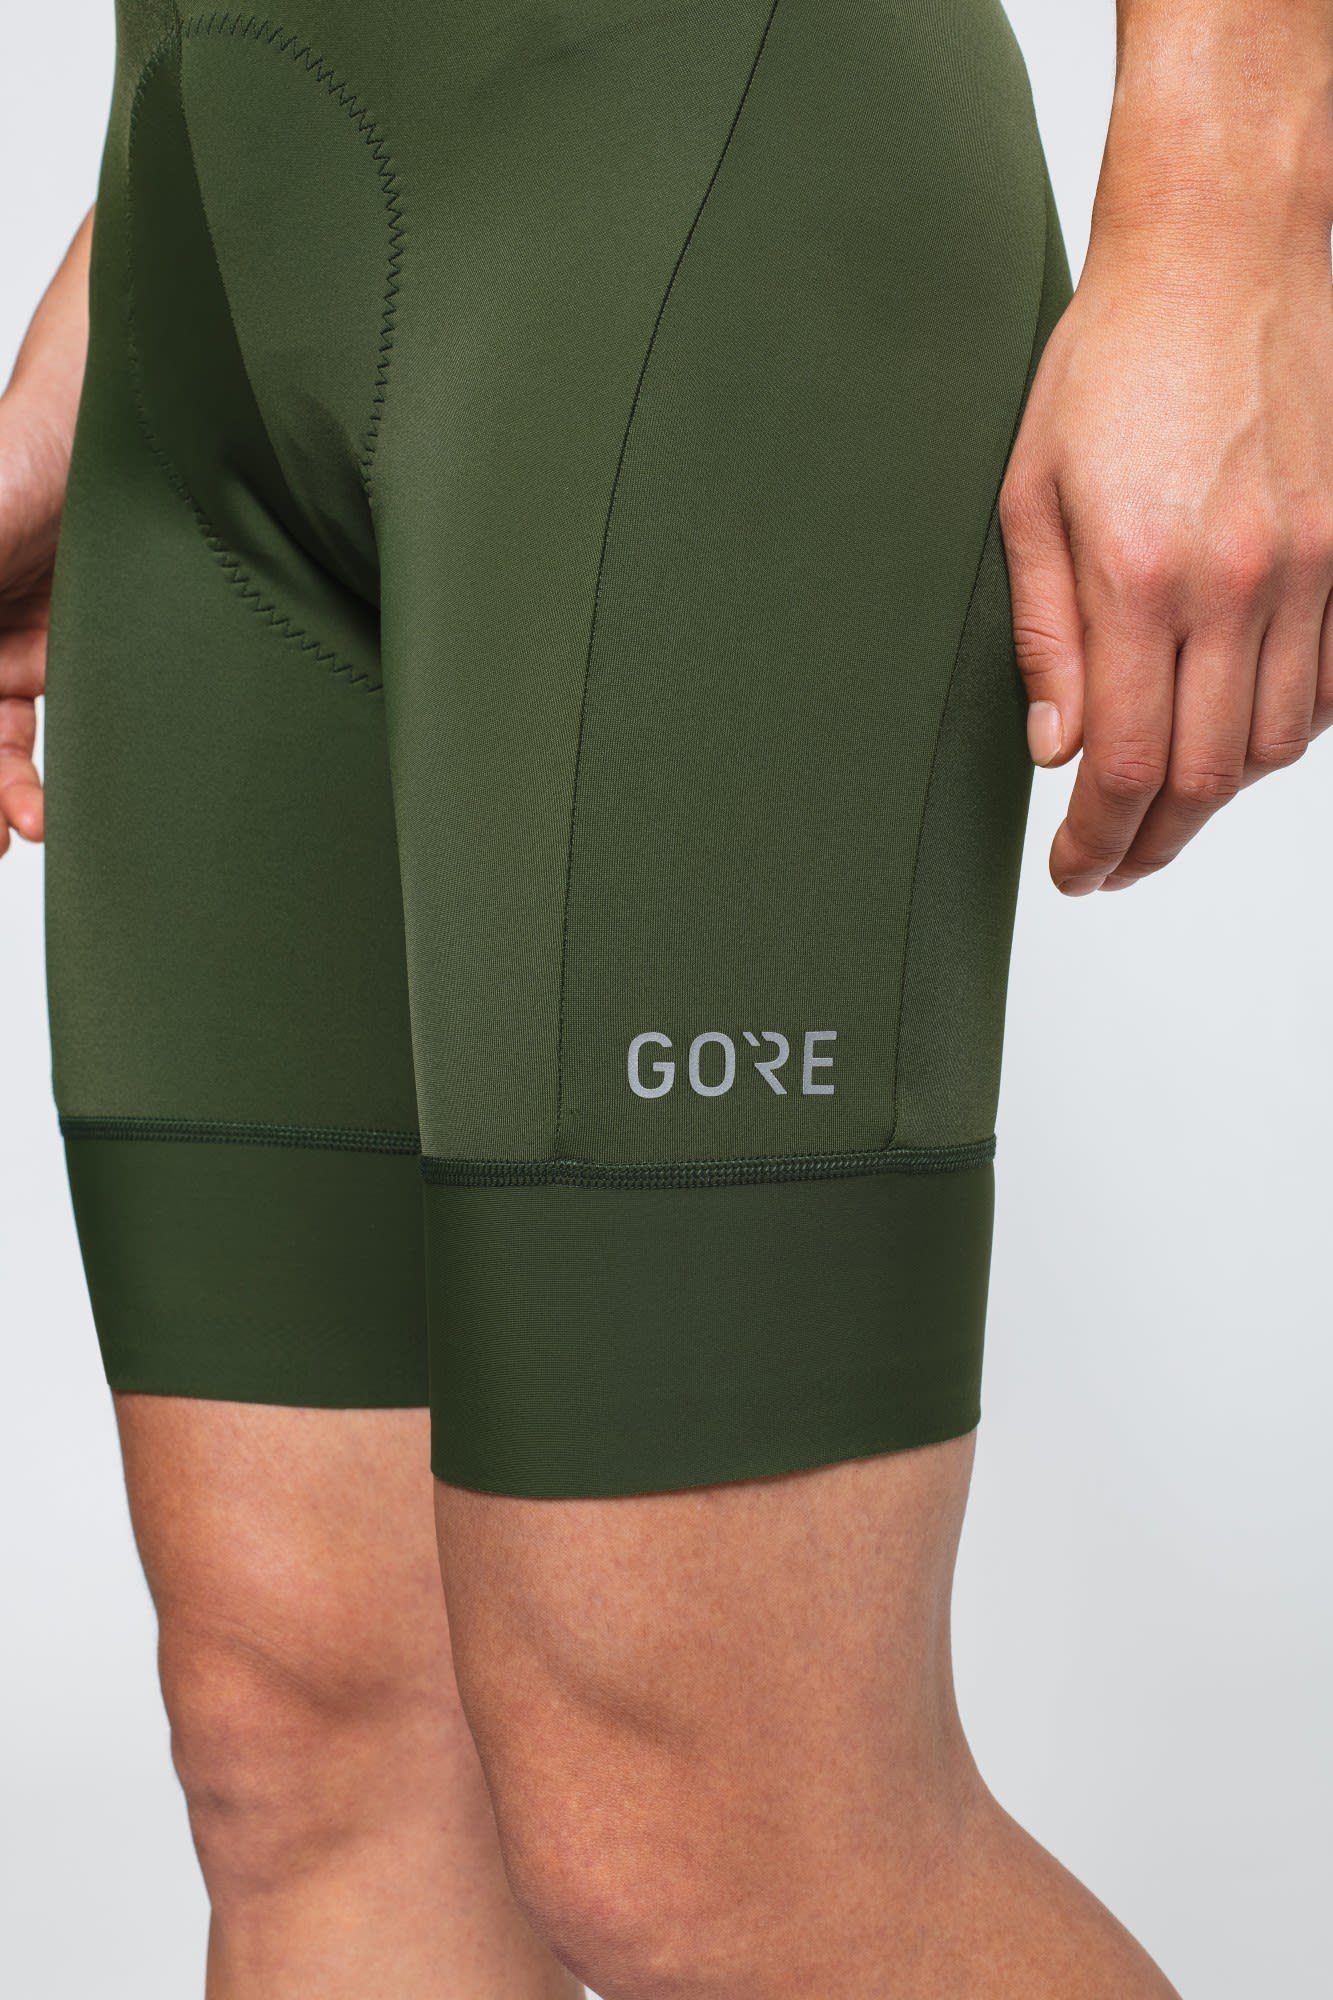 & Shorts Ardent Gore Shorts+ W Damen Shorts grün GORE® Wear Hose Bib